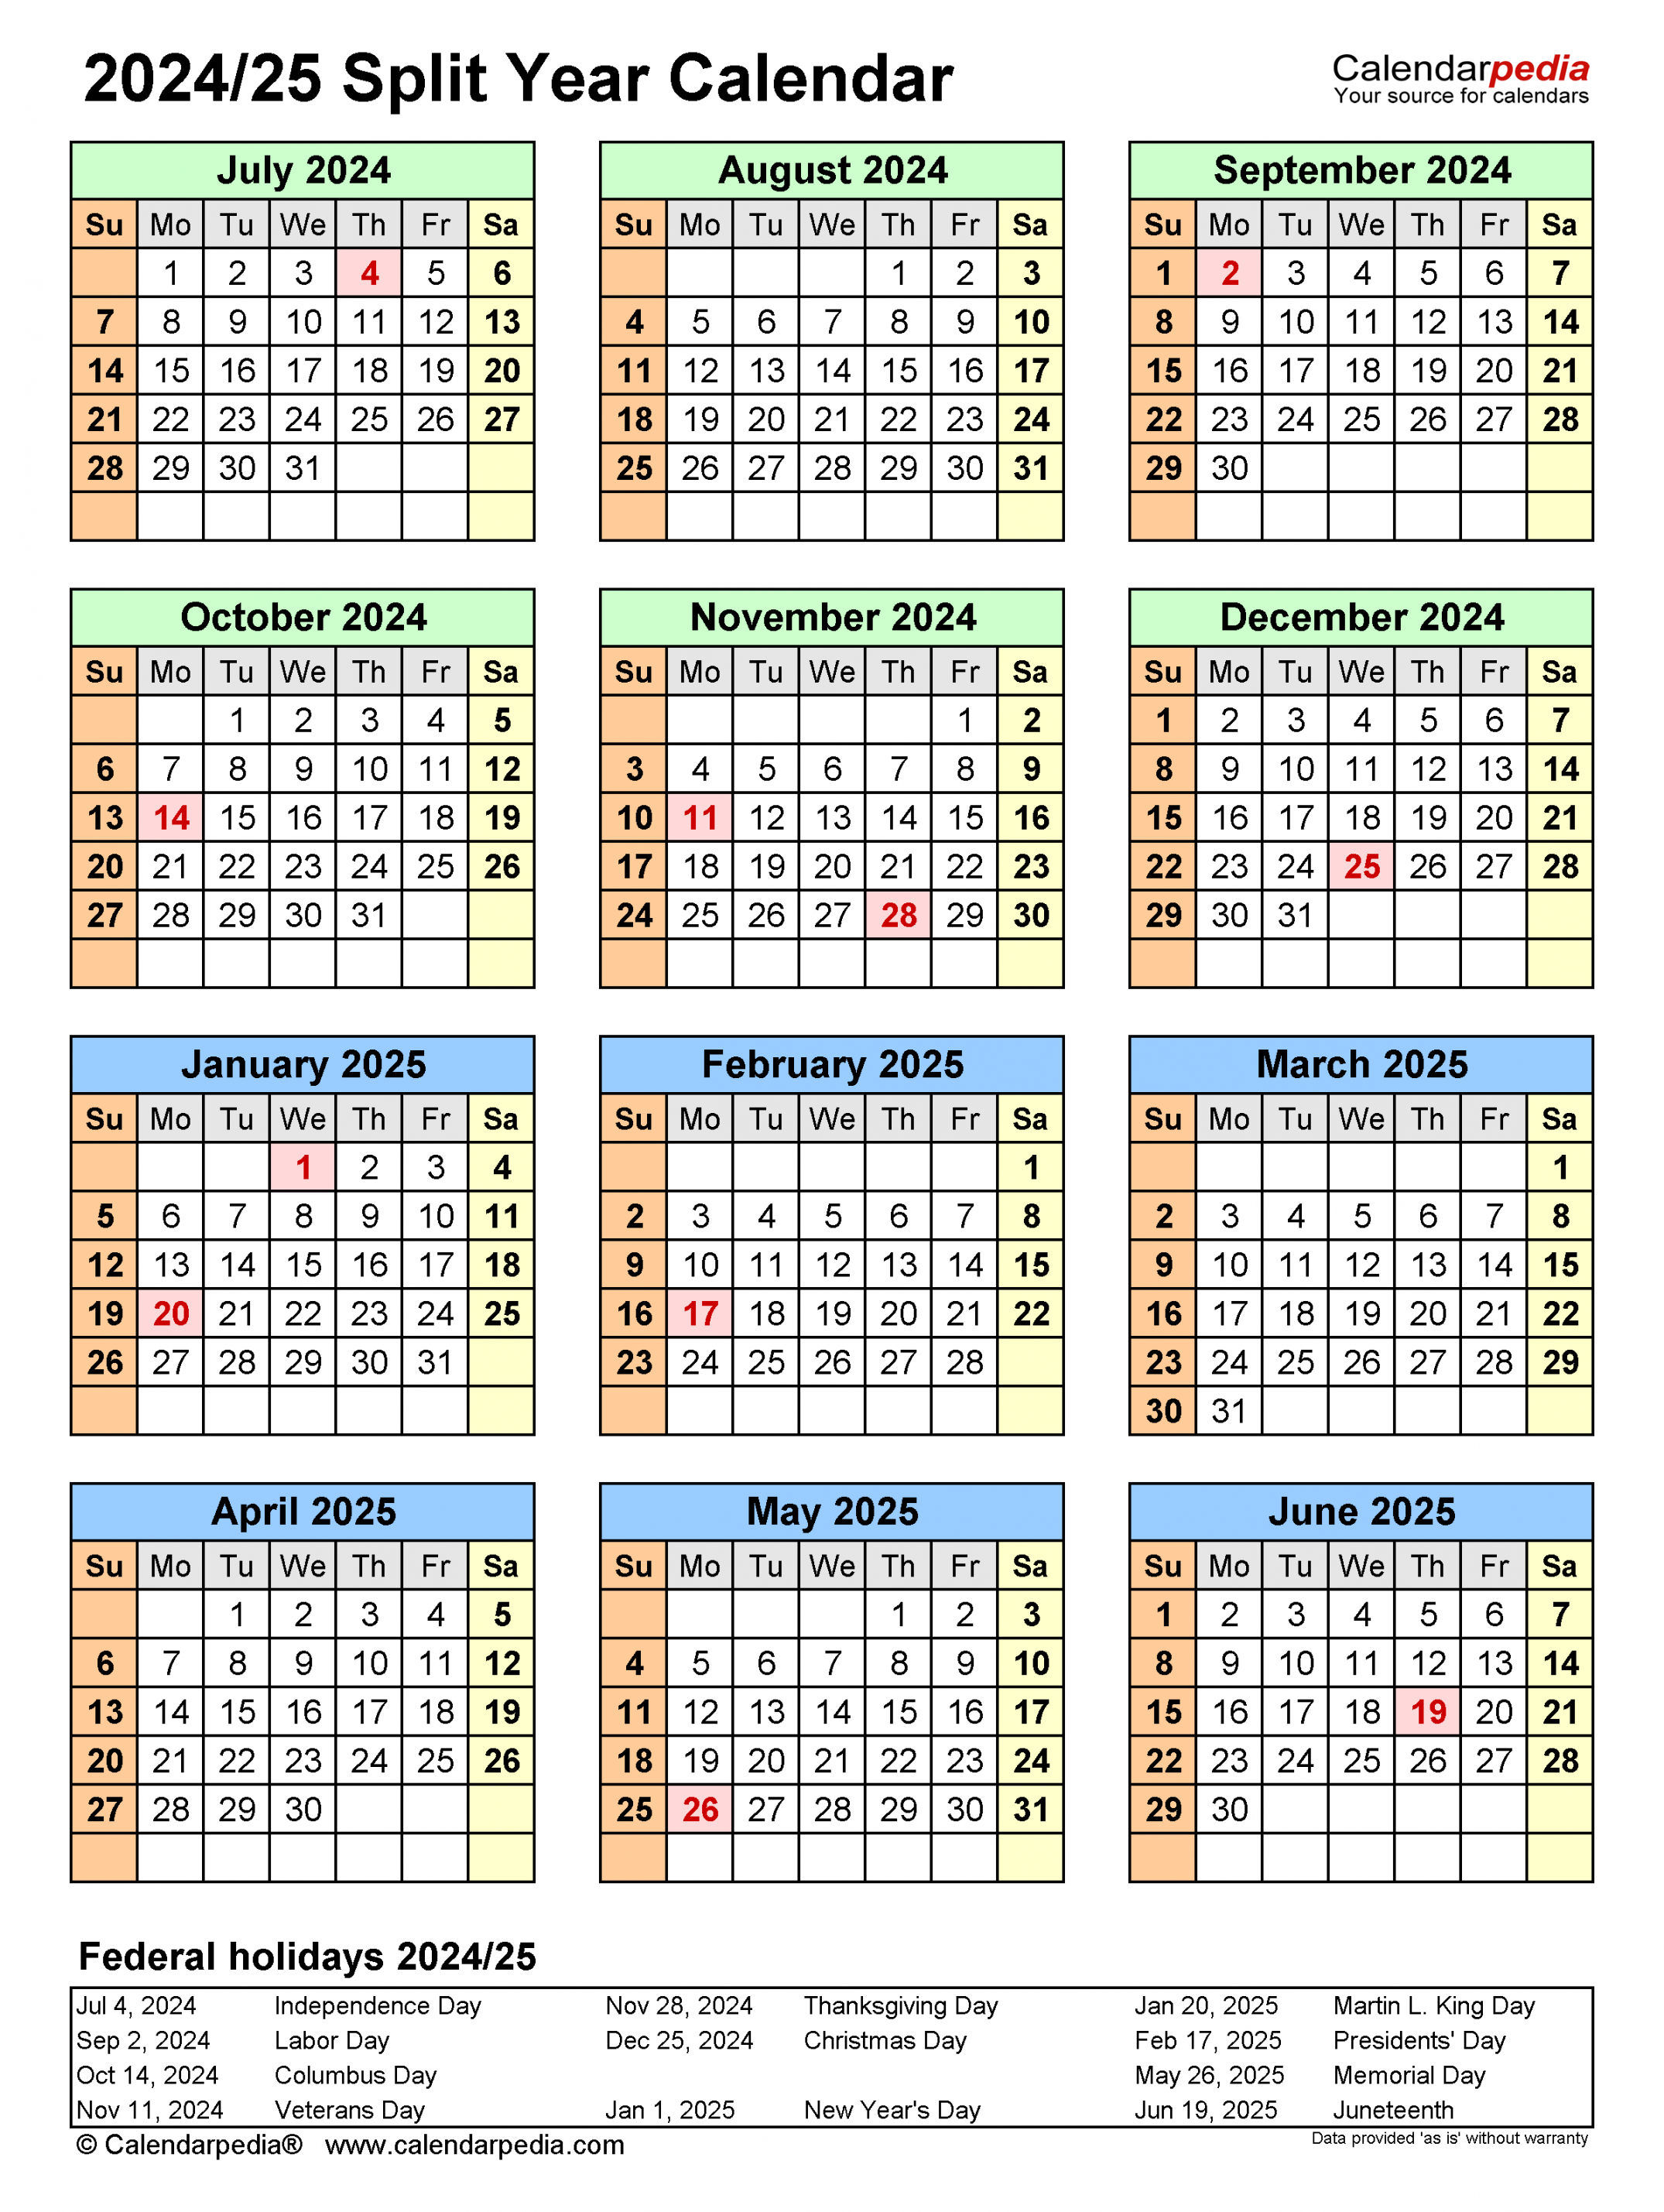 Split Year Calendars / (July to June) - PDF templates